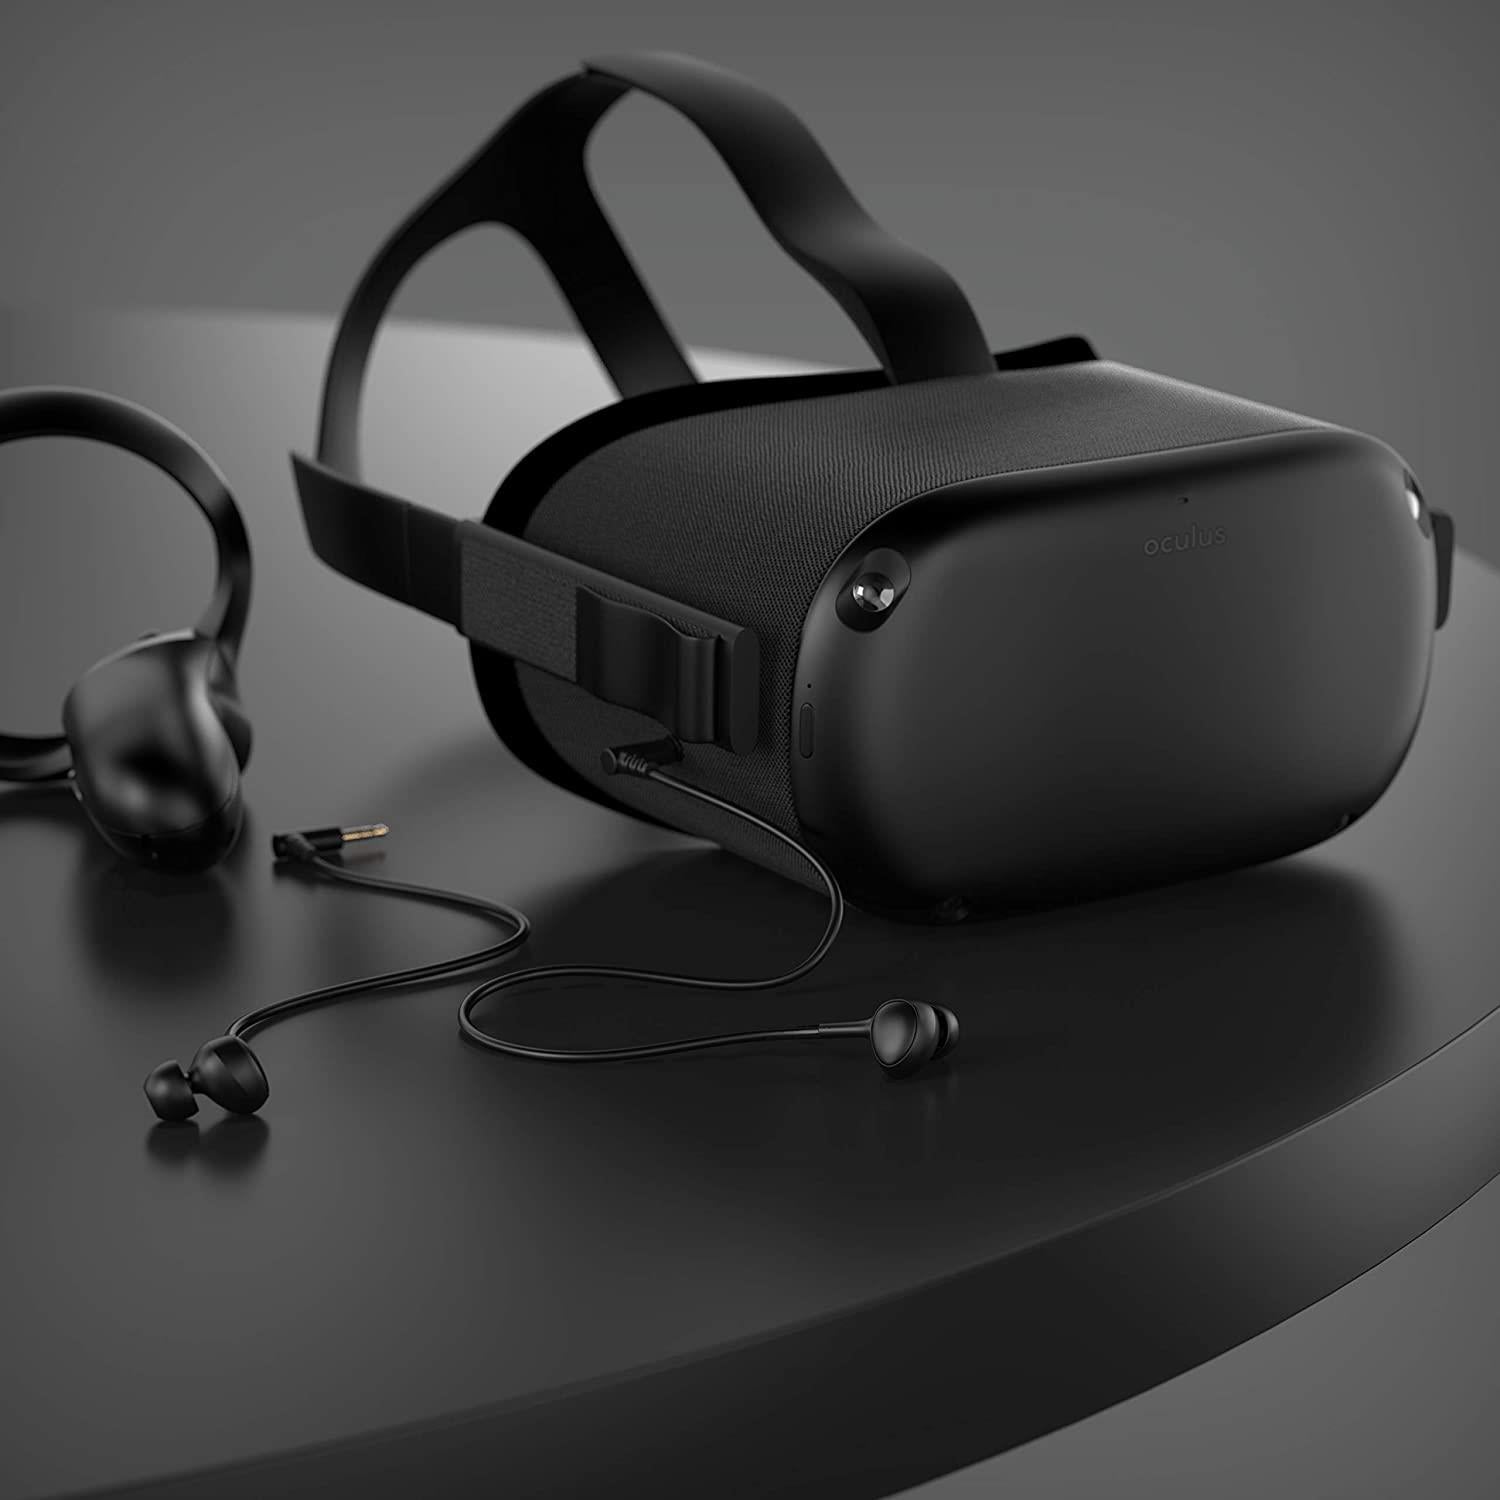 Oculus Quest In-Ear Headphones for Oculus Quest (2019)